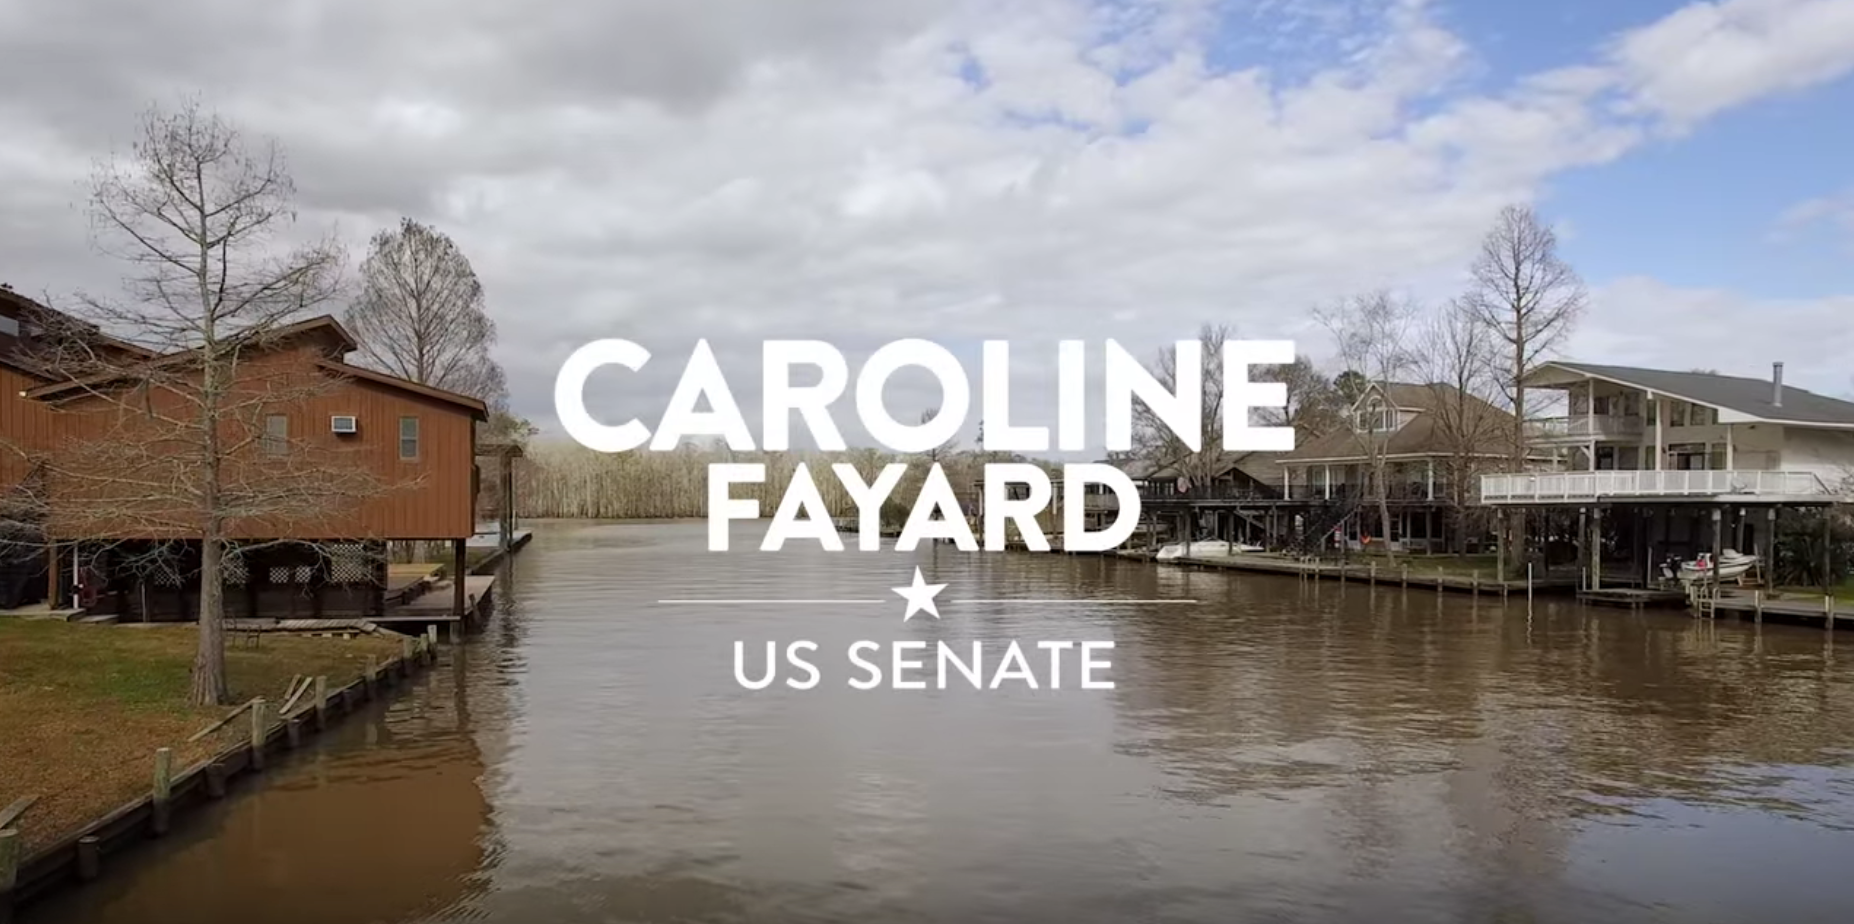 Caroline Fayard Launches Campaign For US Senate in Louisiana